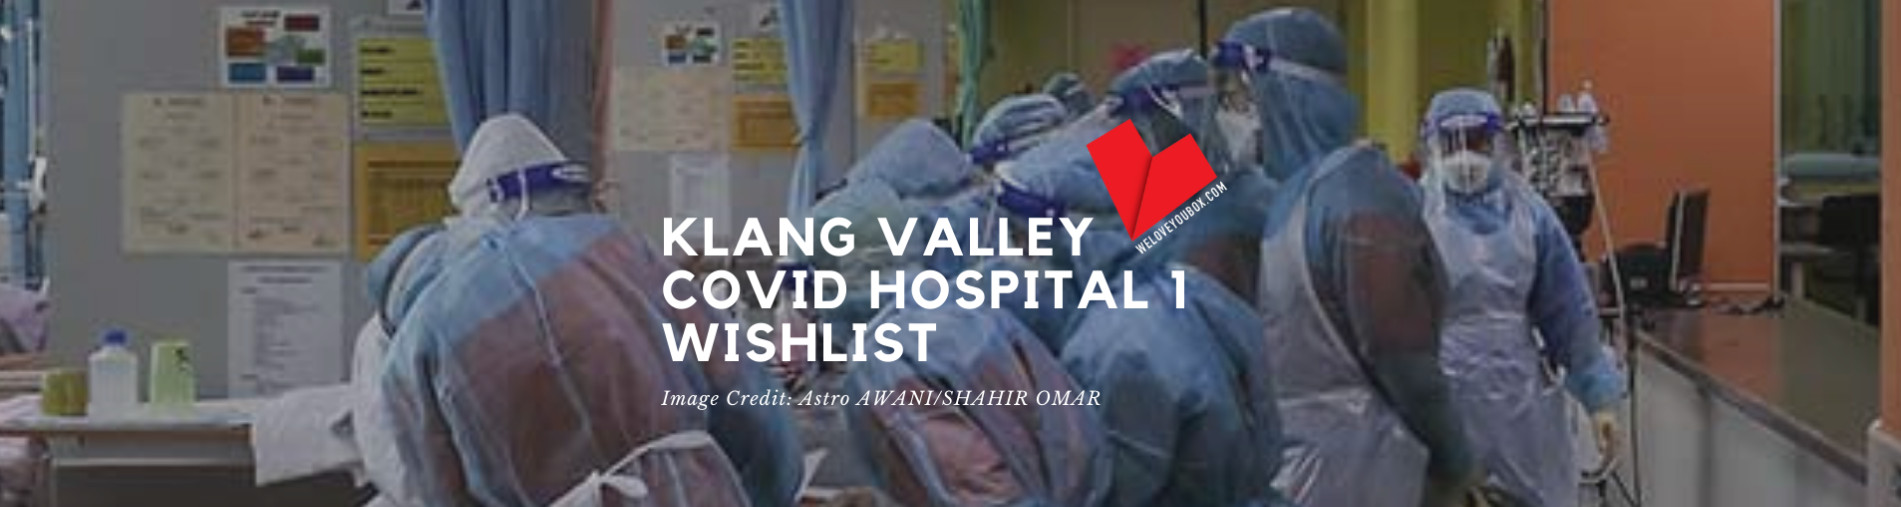 Klang Valley Covid Hospital 1 Wishlist